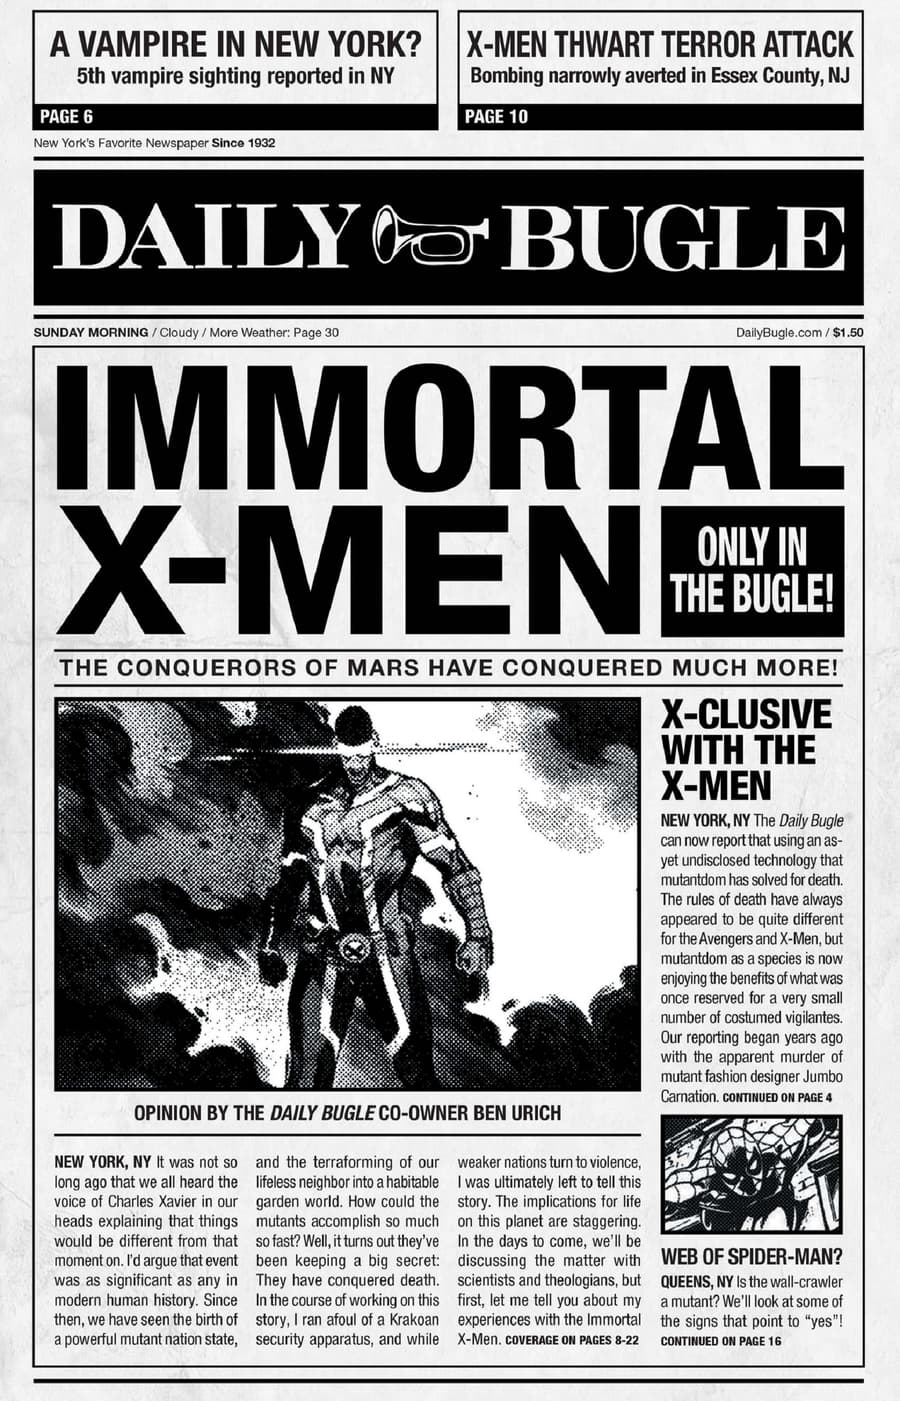 The Immortal X-Men headline.